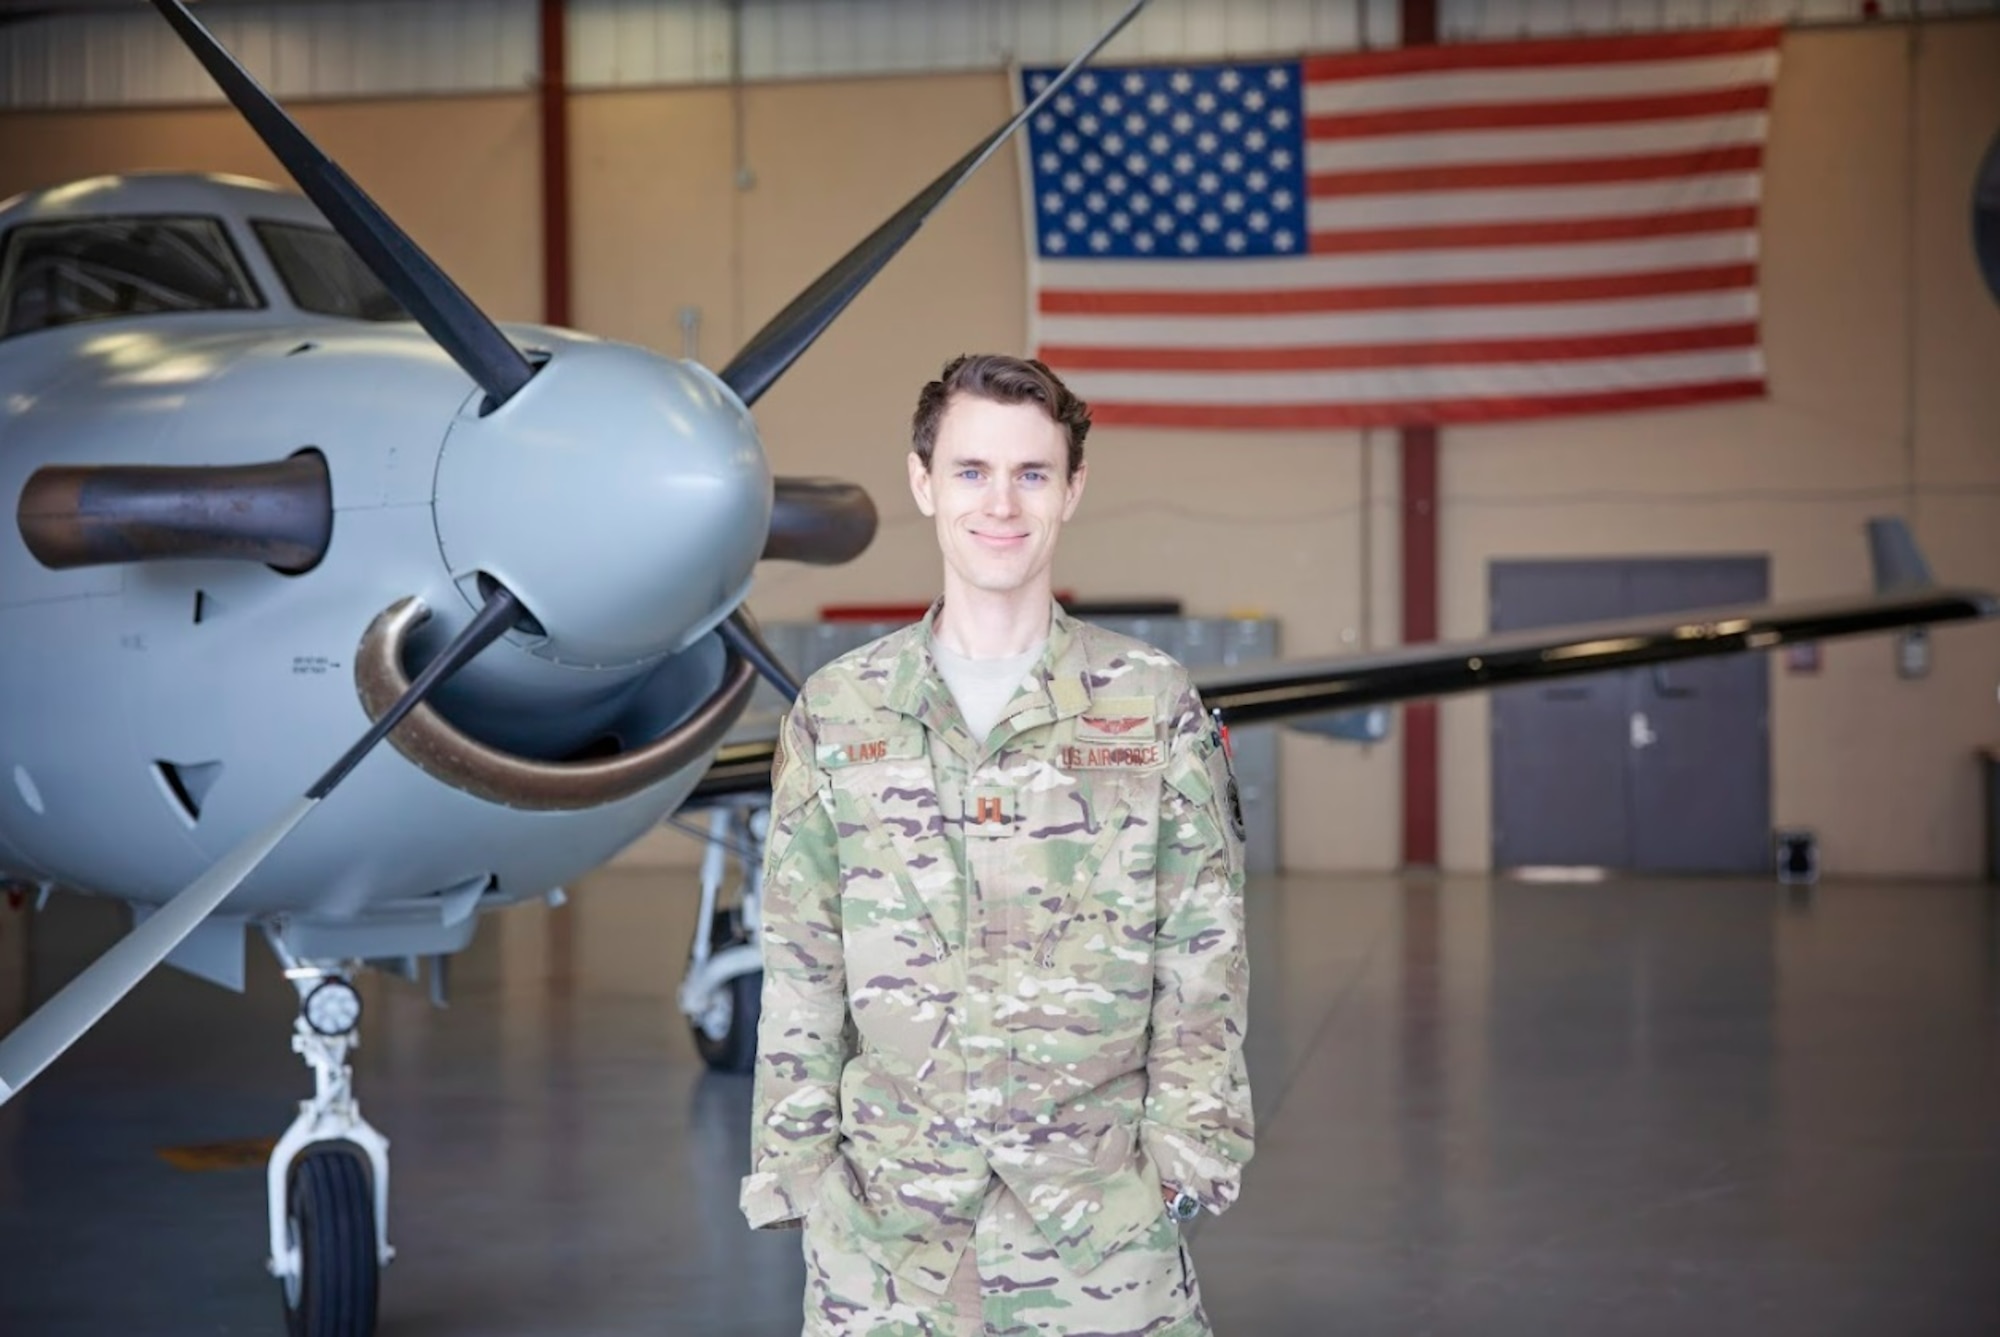 An officer stands in front of an aircraft inside of a hangar.